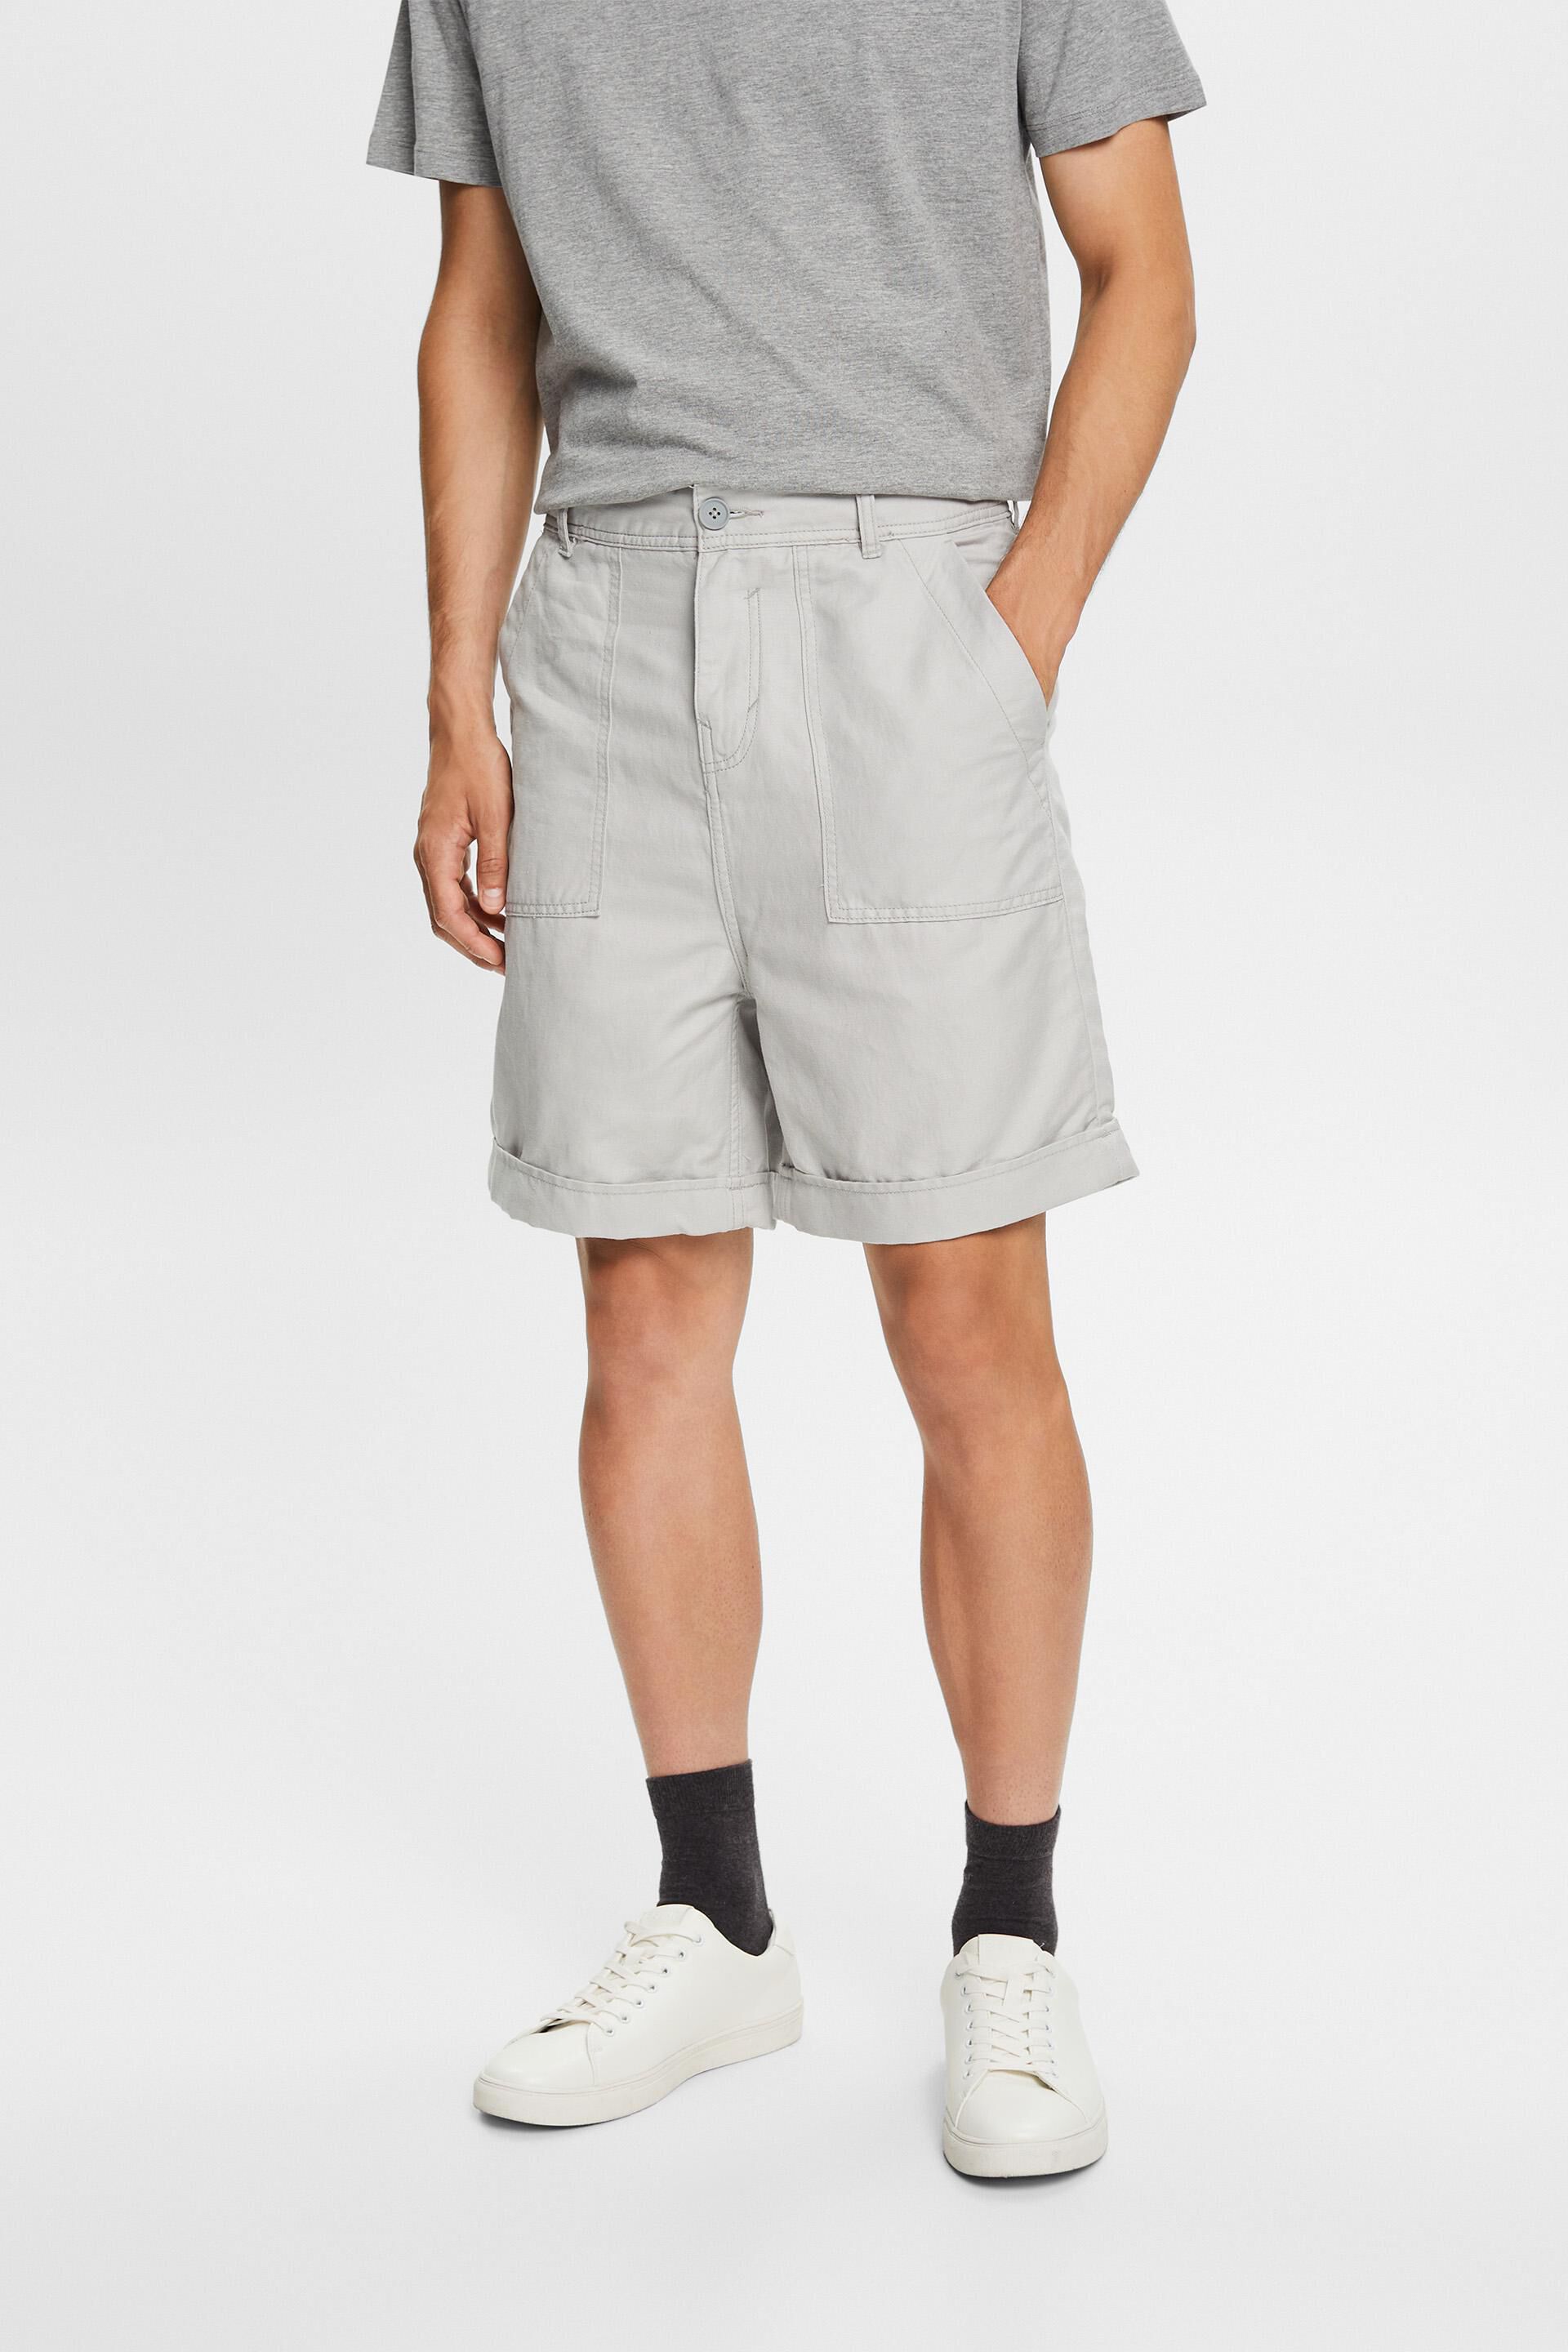 Esprit Bermuda cotton-linen shorts, blend